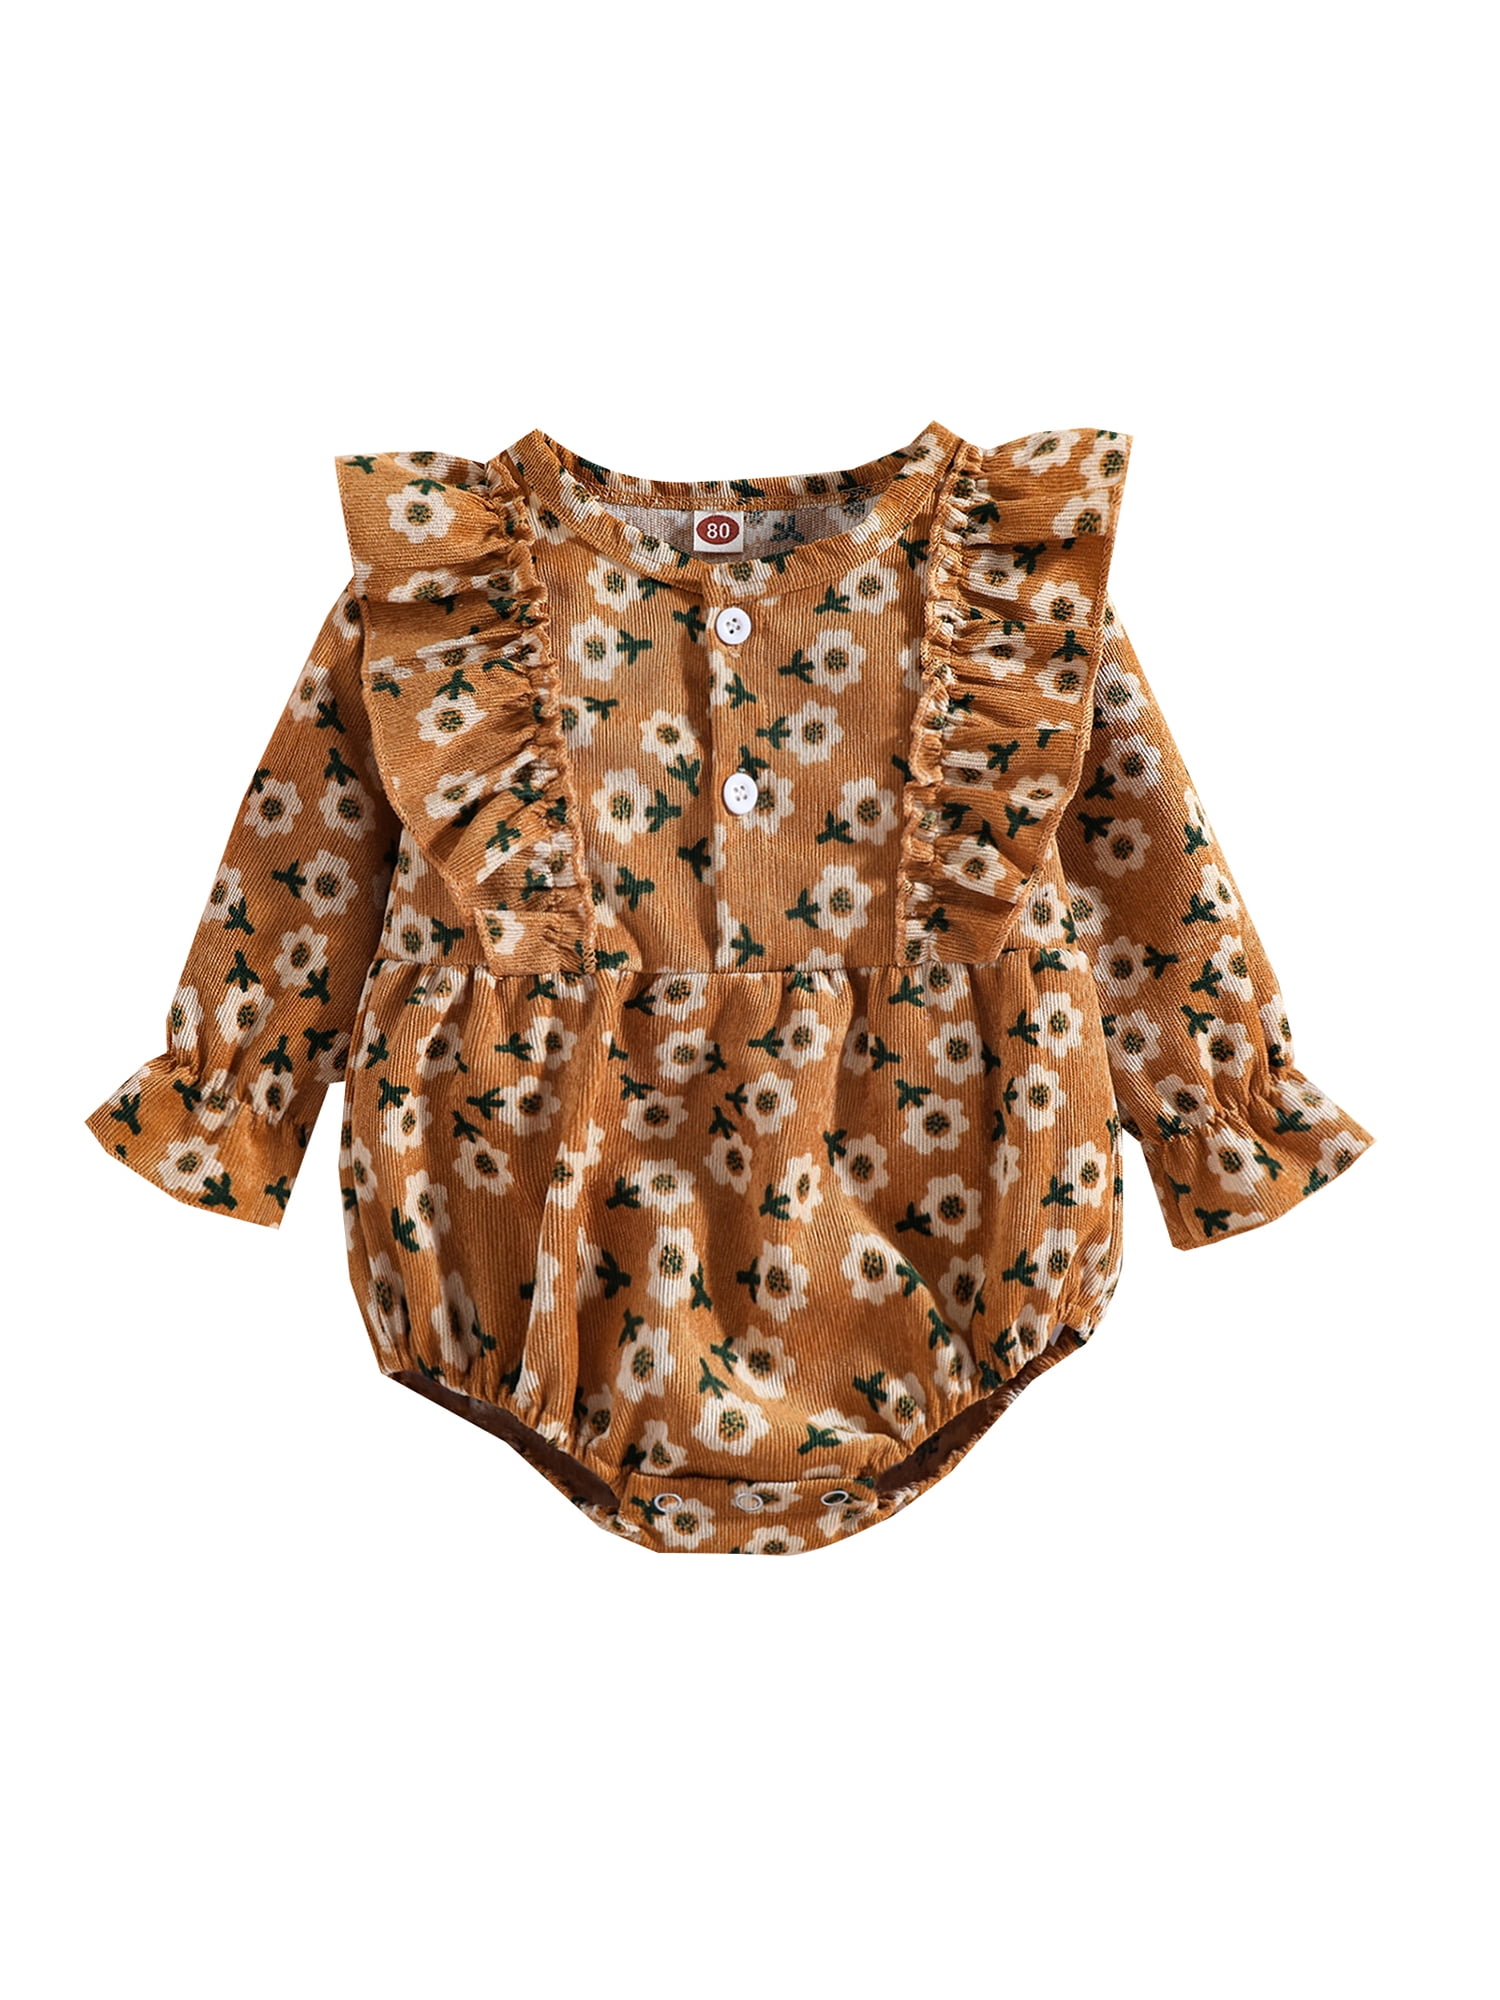 Newborn Infant Baby Girls Floral Leopard Print Romper Jumpsuit Outfits Playsuit